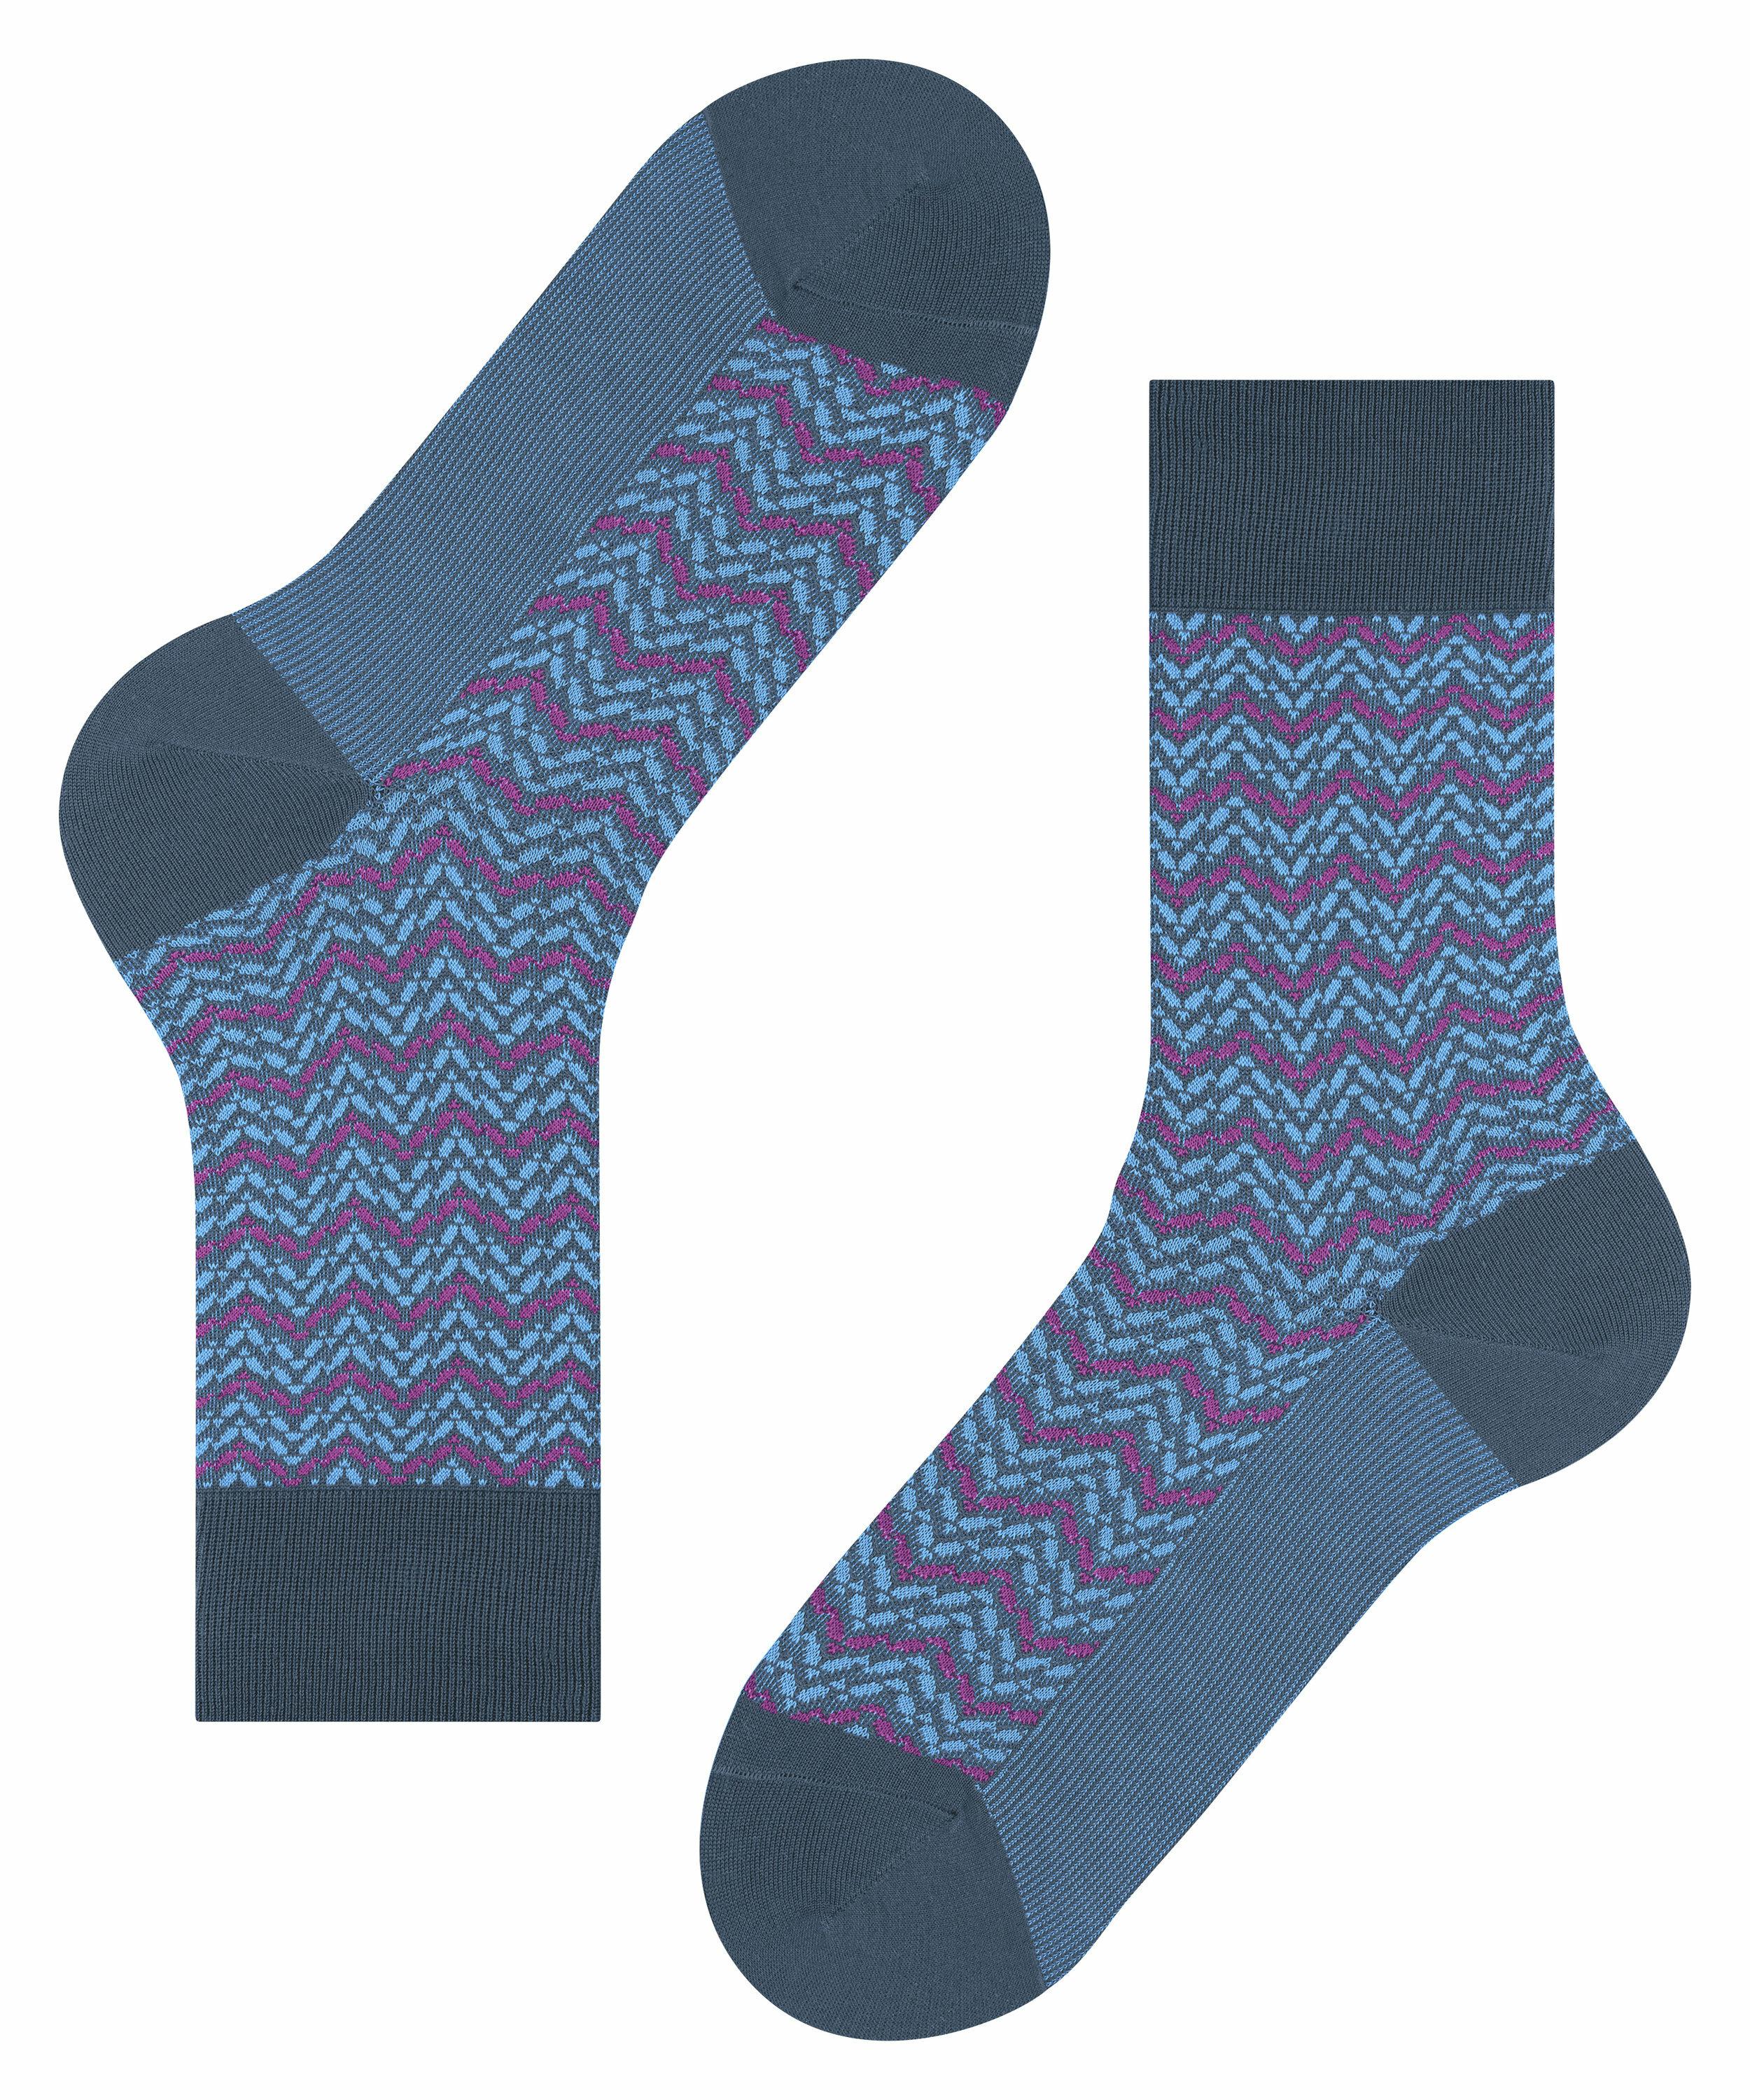 FALKE Colour Waves Herren Socken, 39-40, Blau, AnderesMuster, Baumwolle, 12 günstig online kaufen